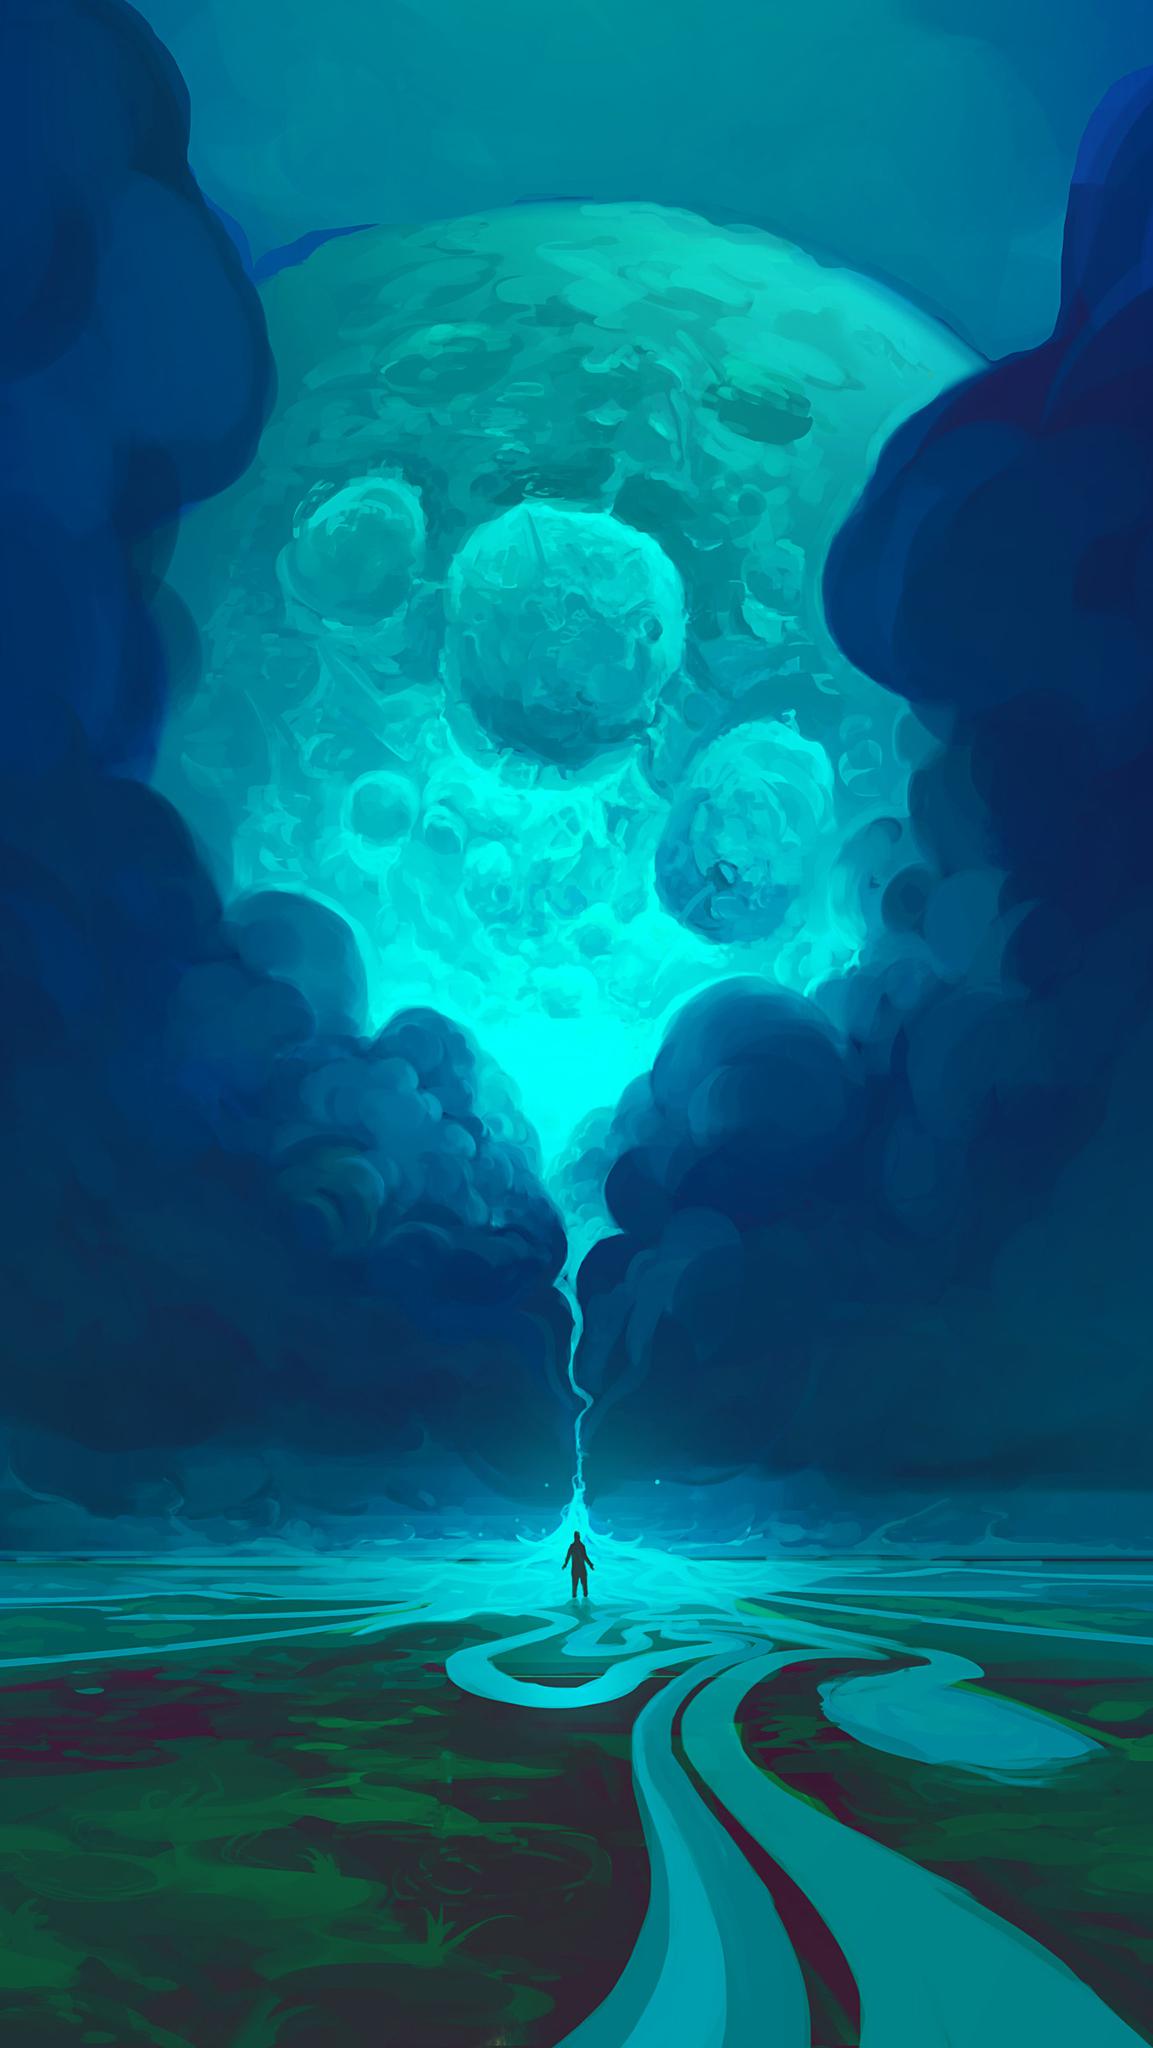 iPhone Wallpaper. Water, Blue, Aqua, Turquoise, Fluid, Sky